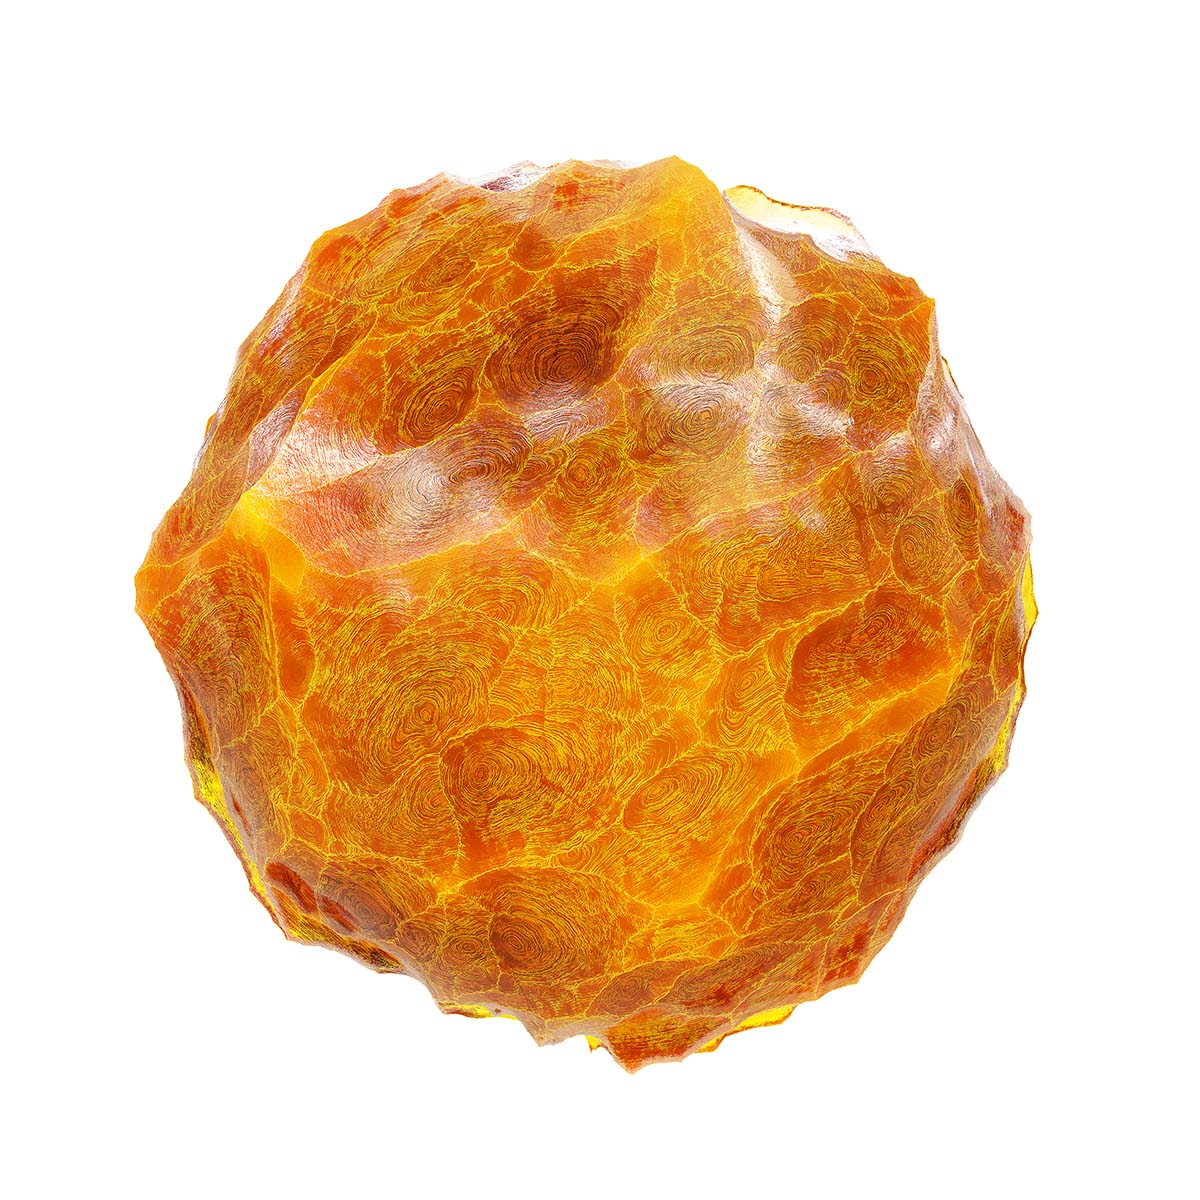 Orange Crystal PBR Texture